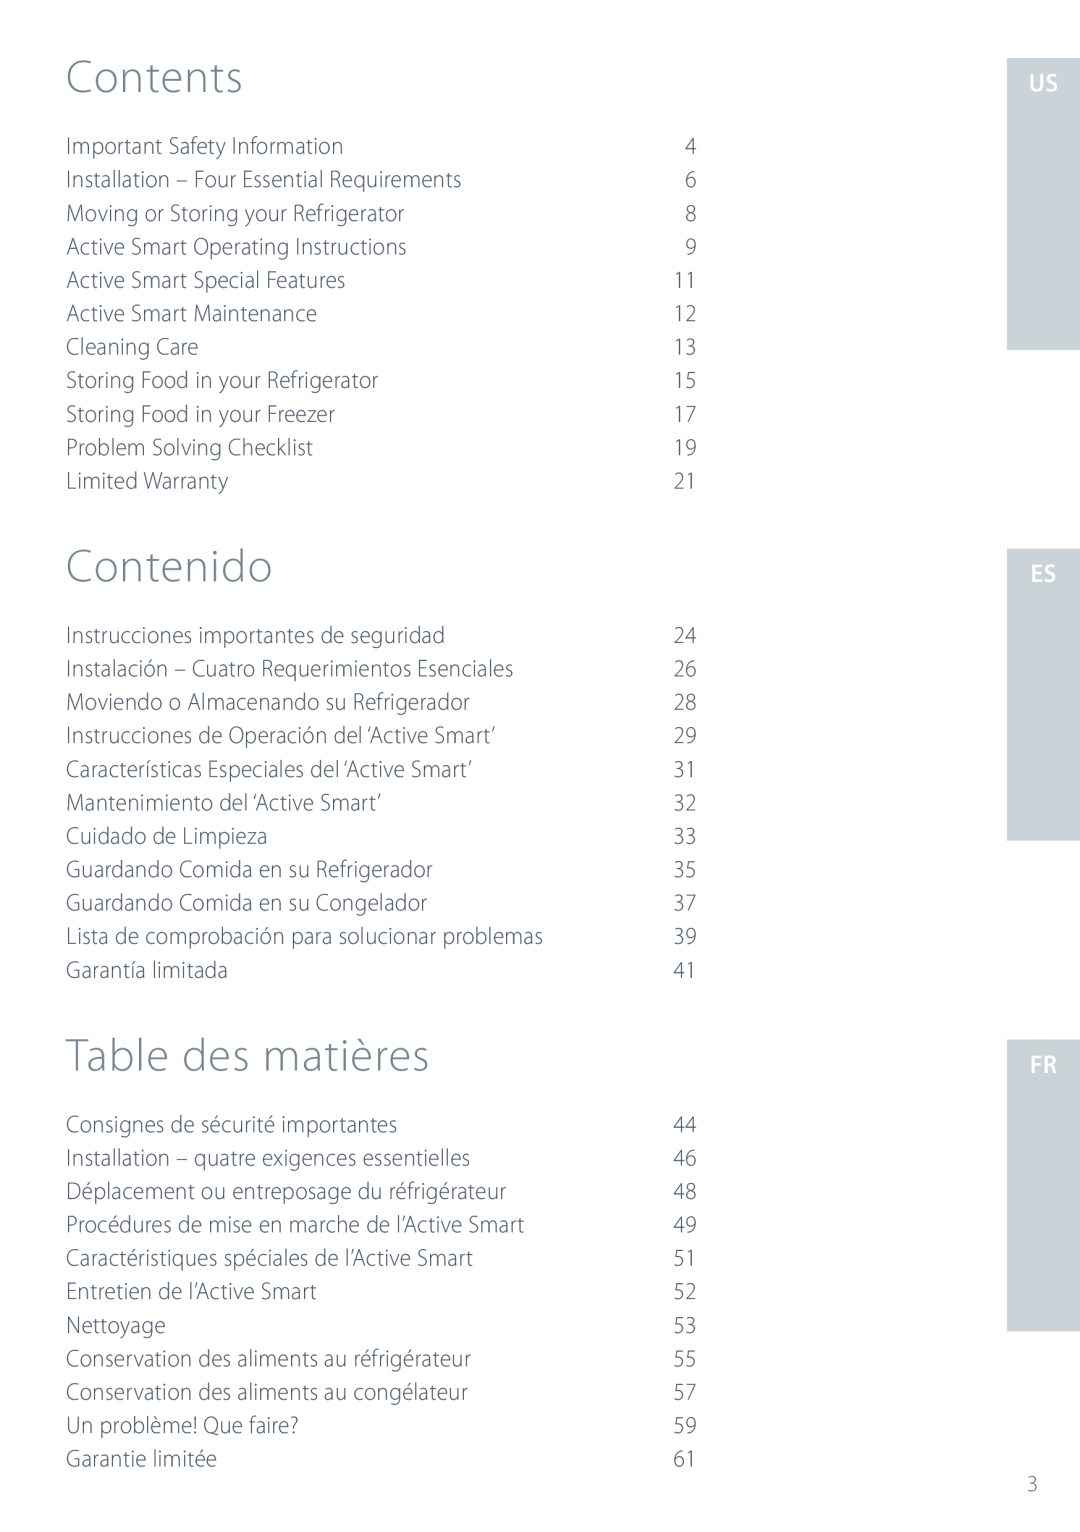 Fisher & Paykel ActiveSmart manual Contents, Contenido, Table des matières 